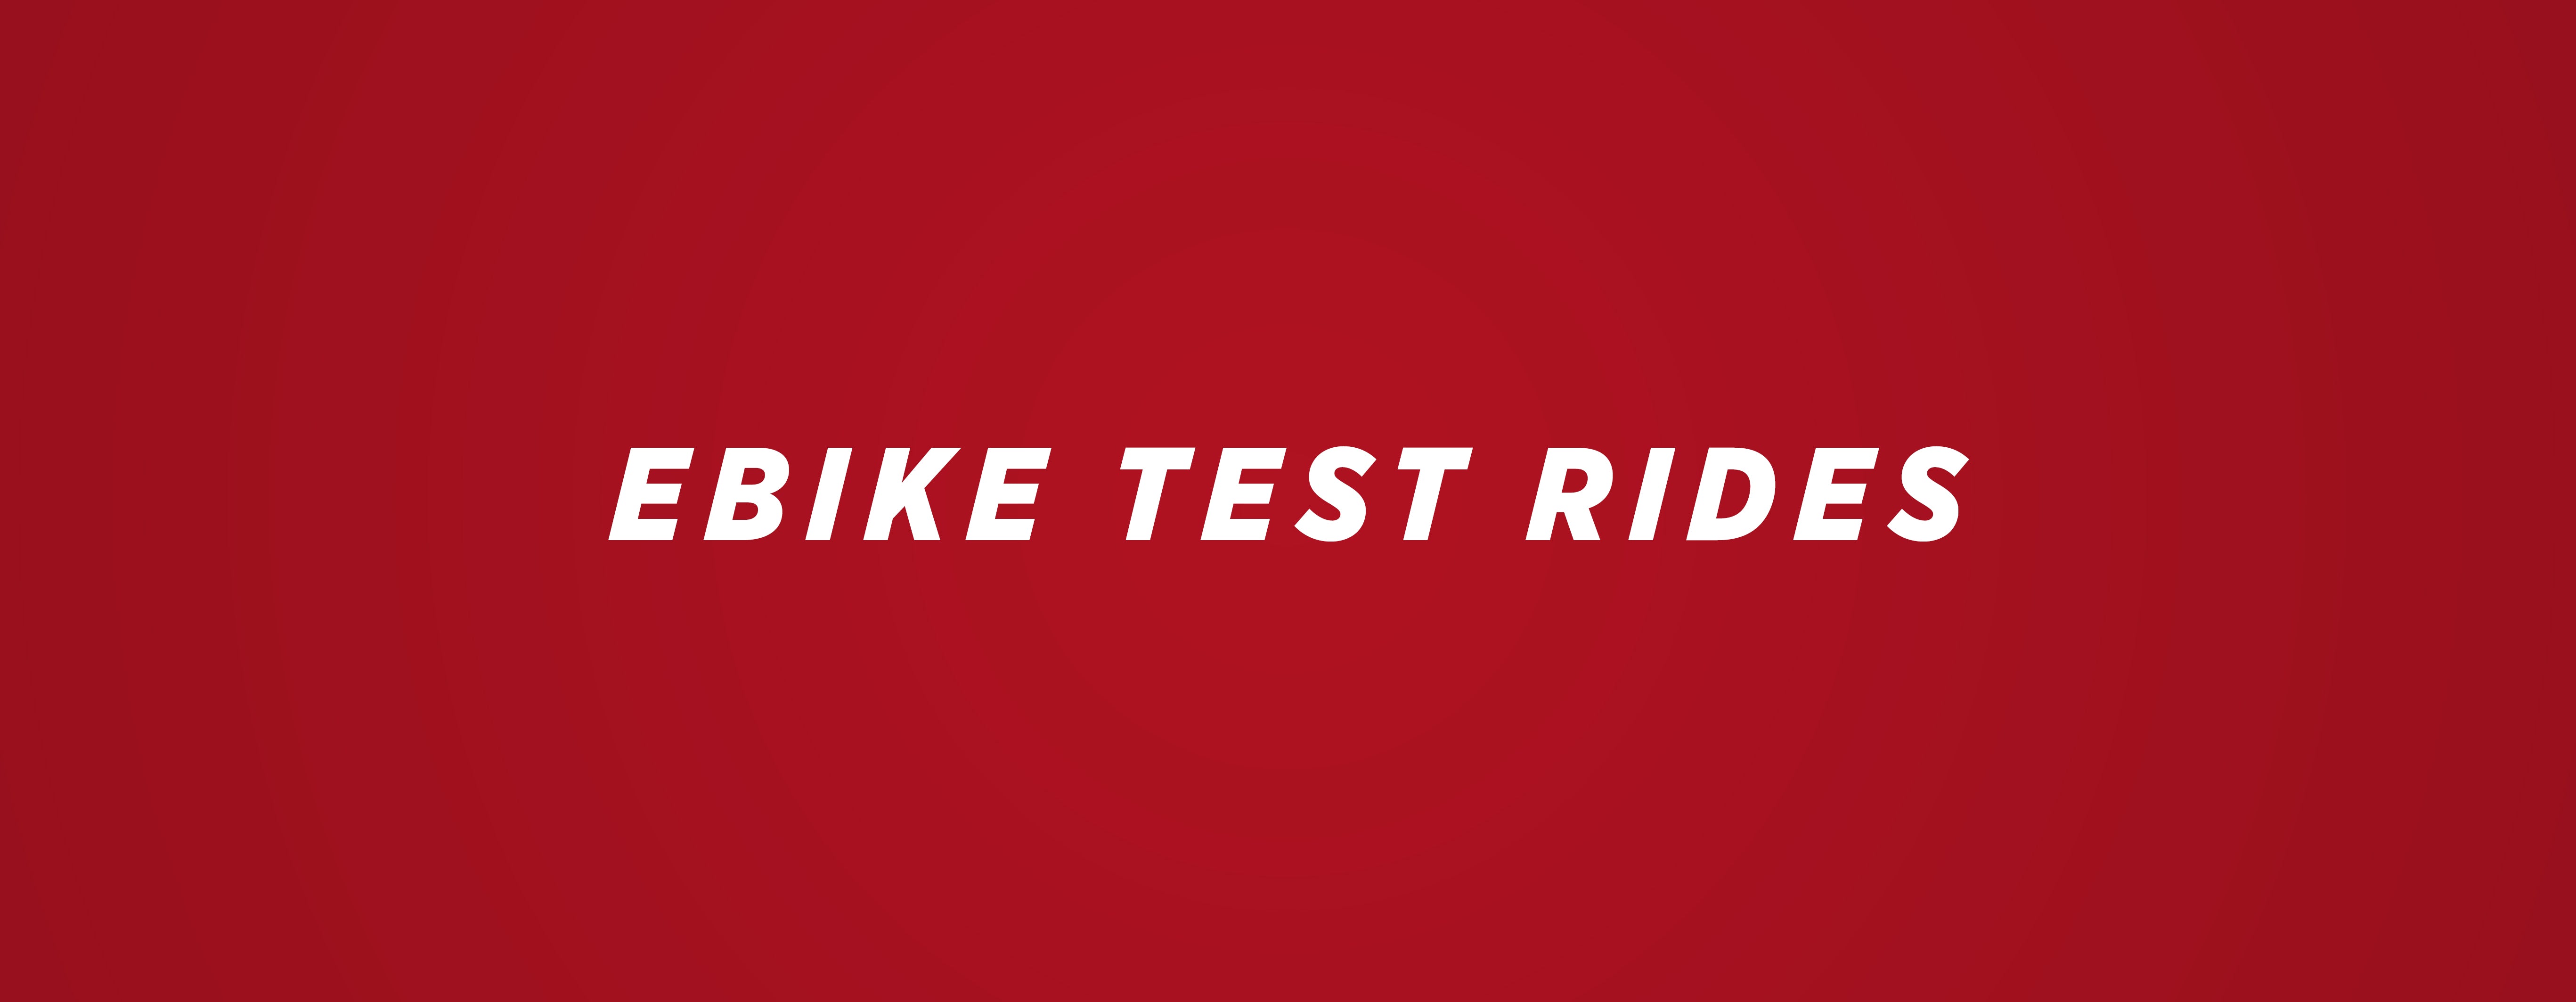 ebike-test-rides-desktop.jpg__PID:e742a12e-5bbb-45c5-9579-012c1d94574f